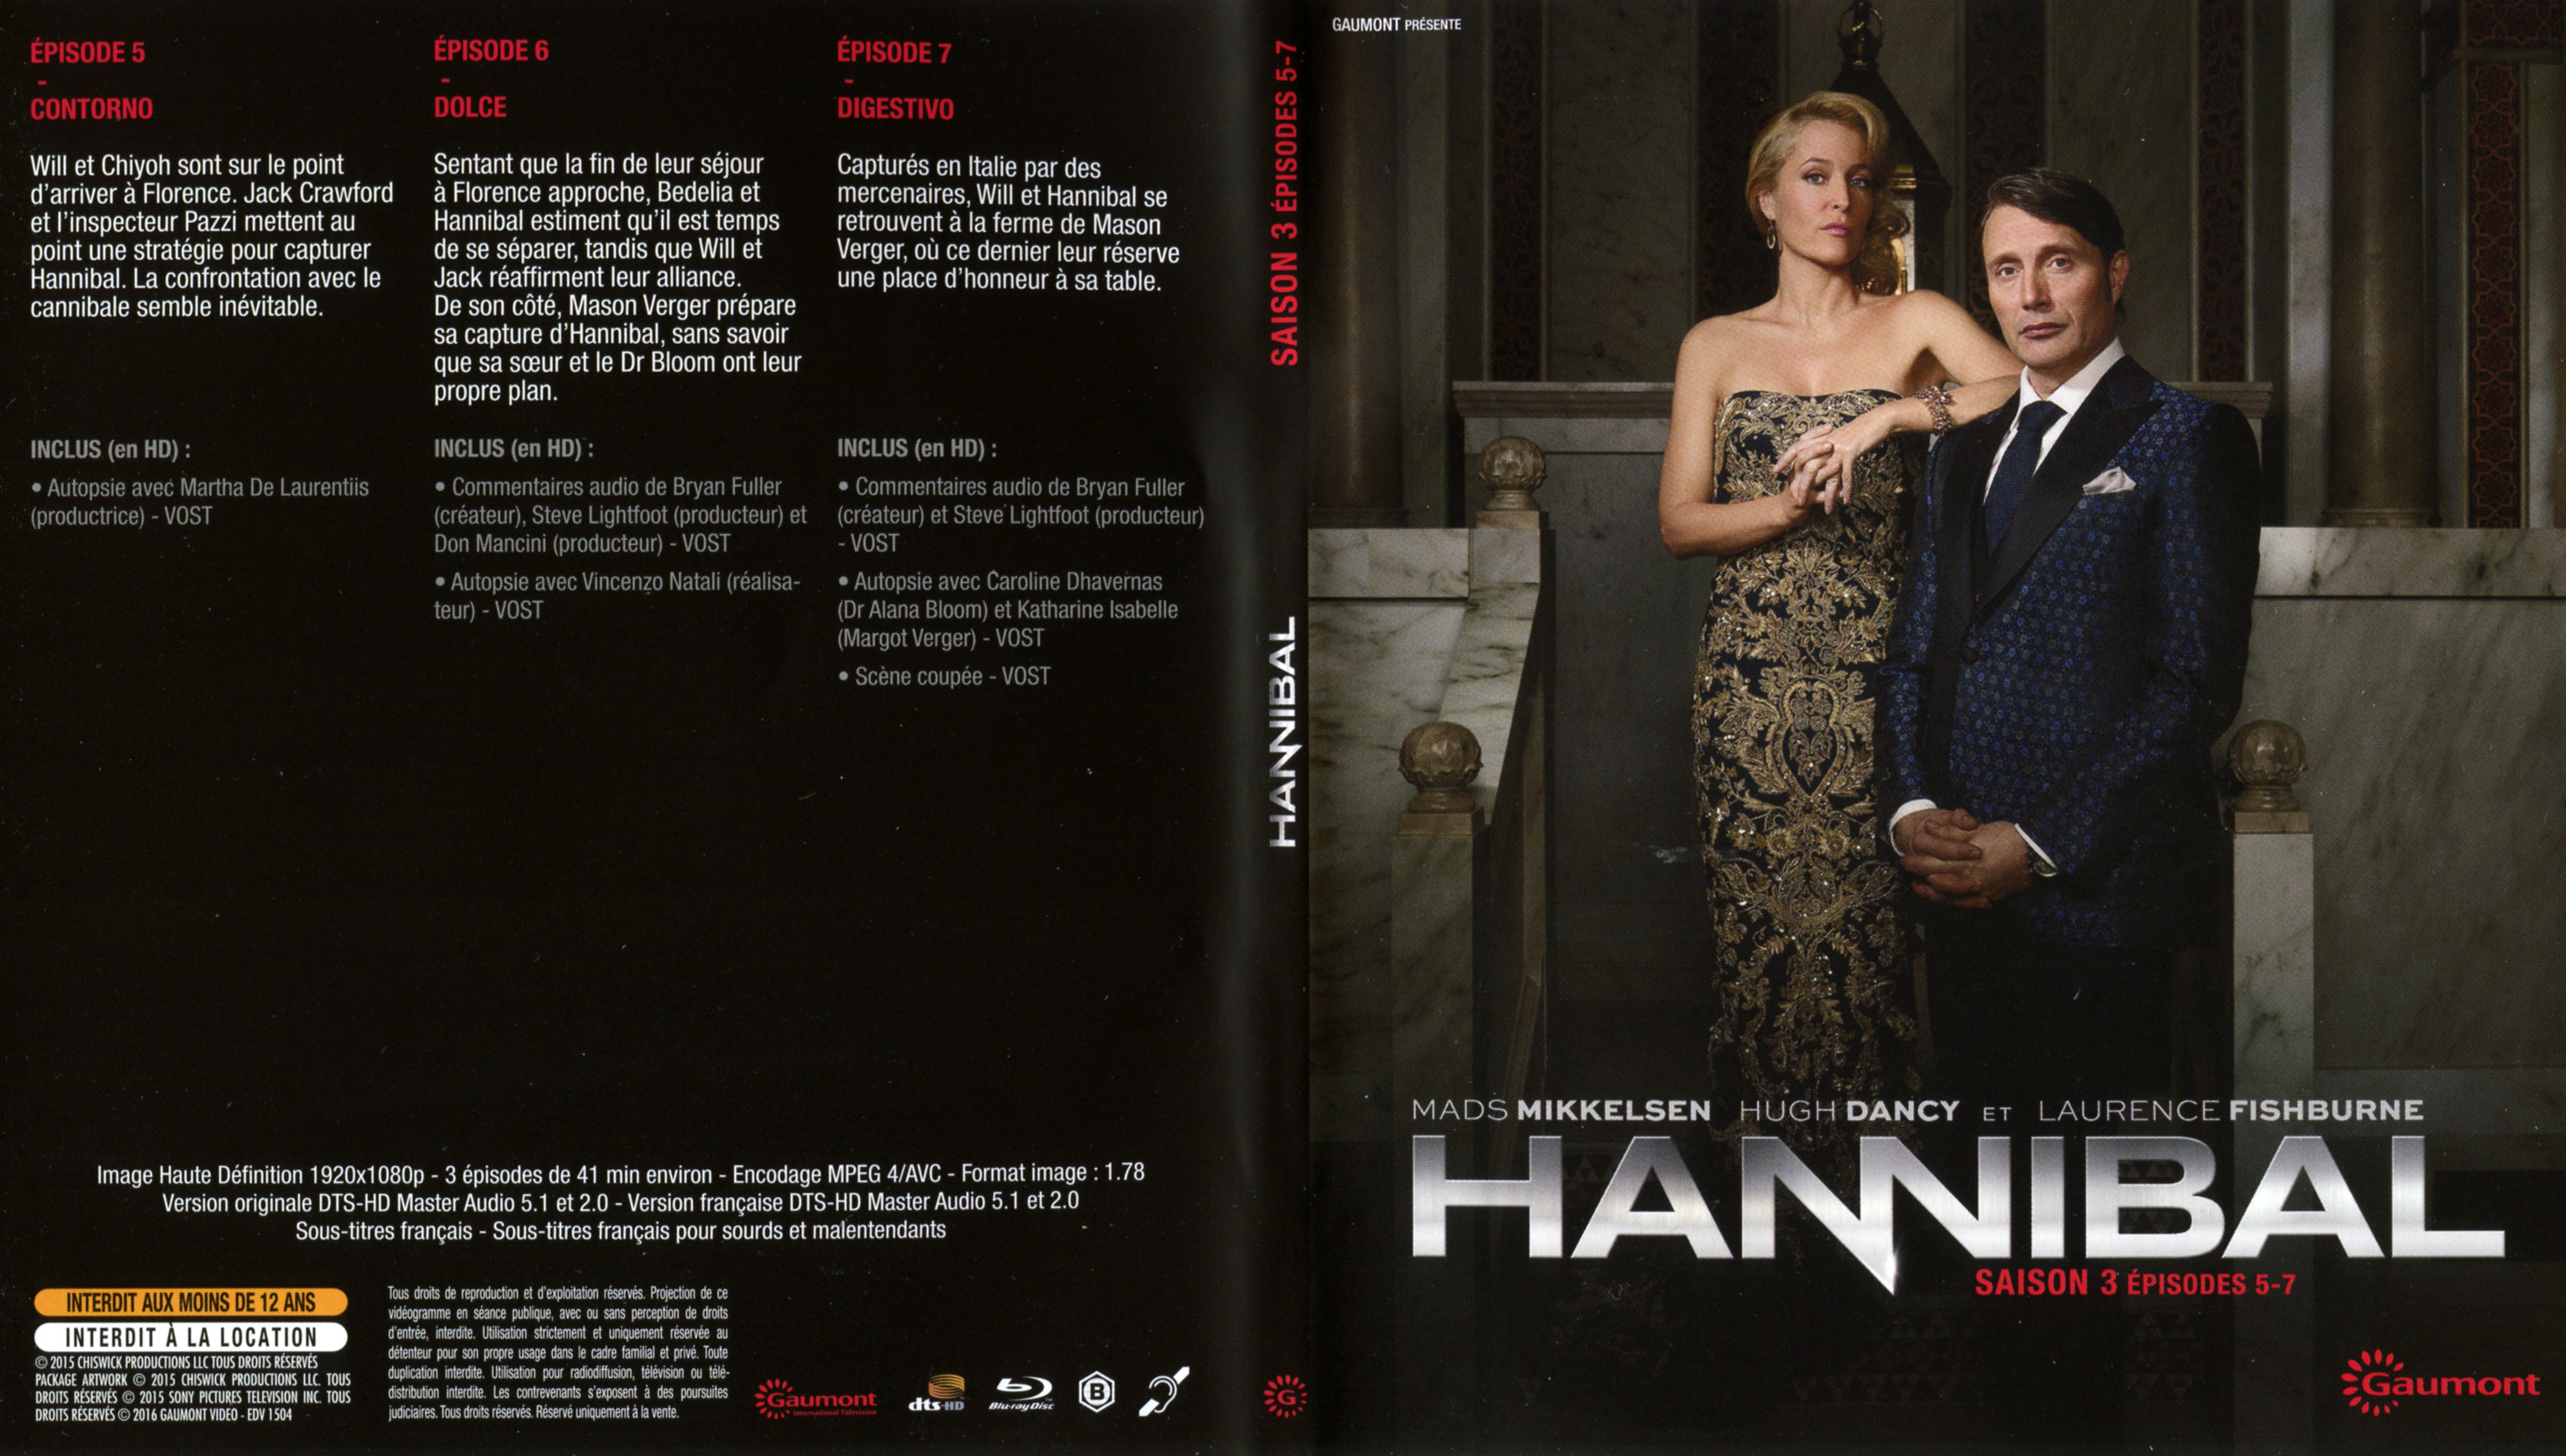 Jaquette DVD Hannibal Saison 3 DISC 2